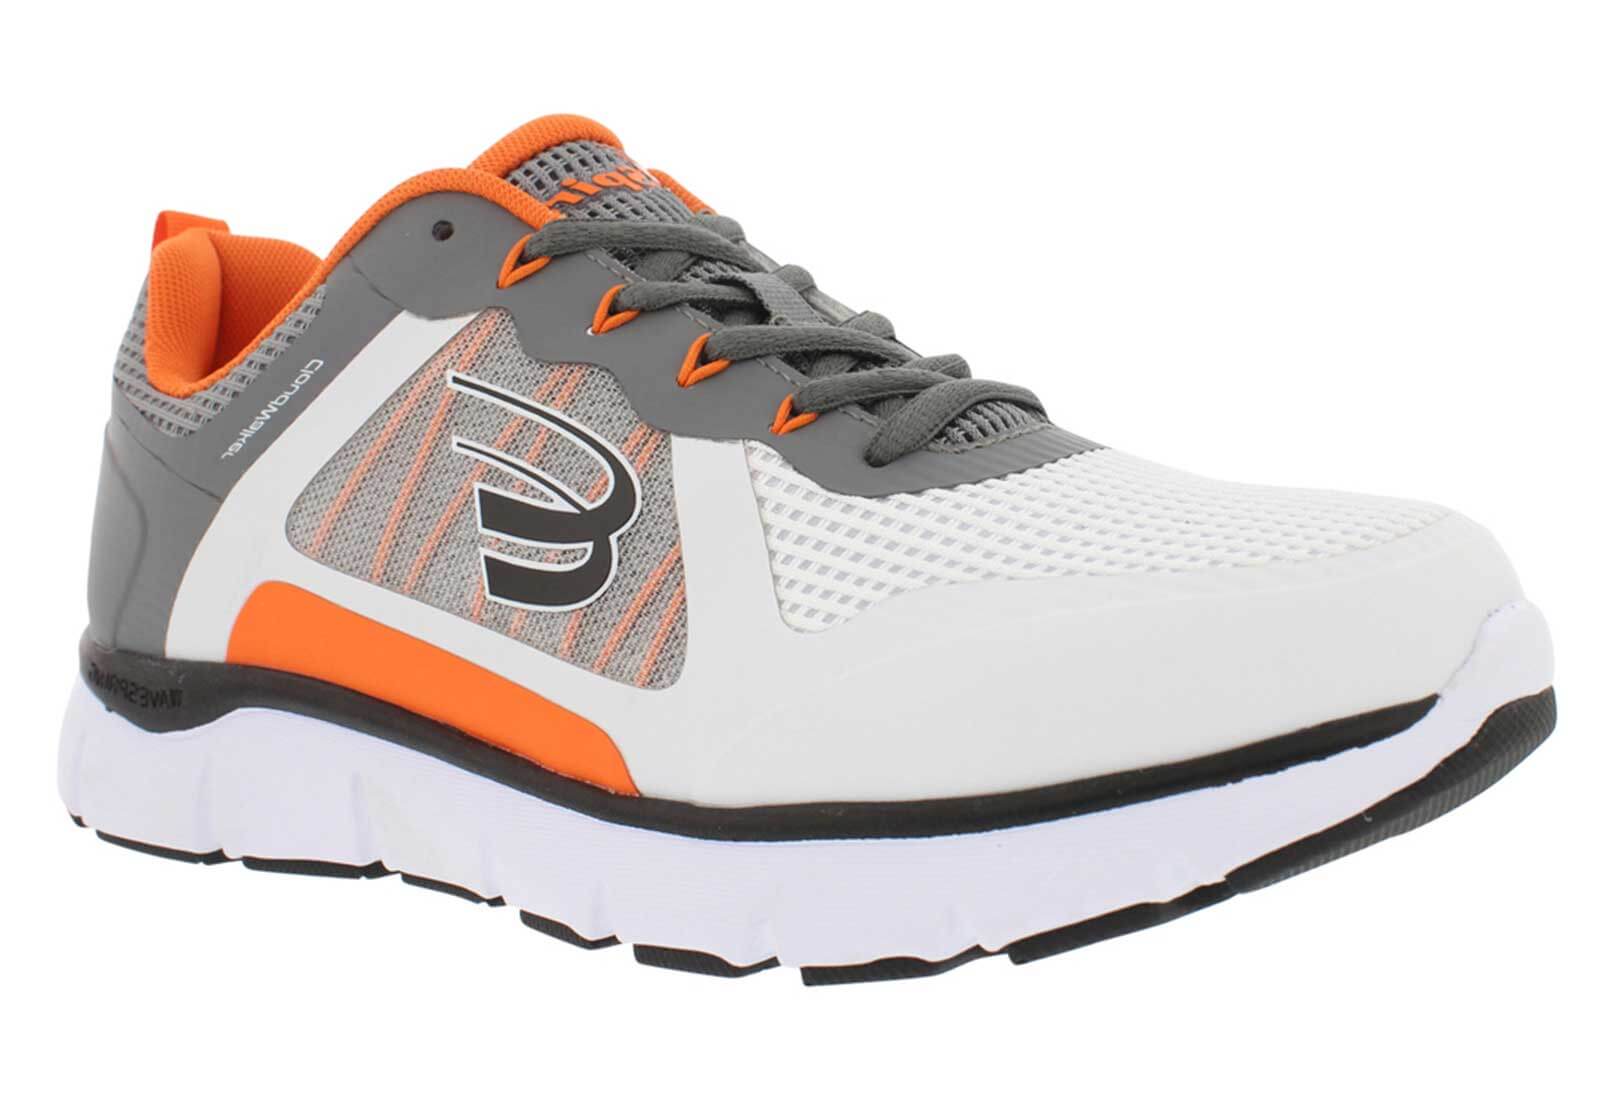 Spira Men's CloudWalker SCLD111 Walking Shoe - Men's Athletic Extra Depth Shoe